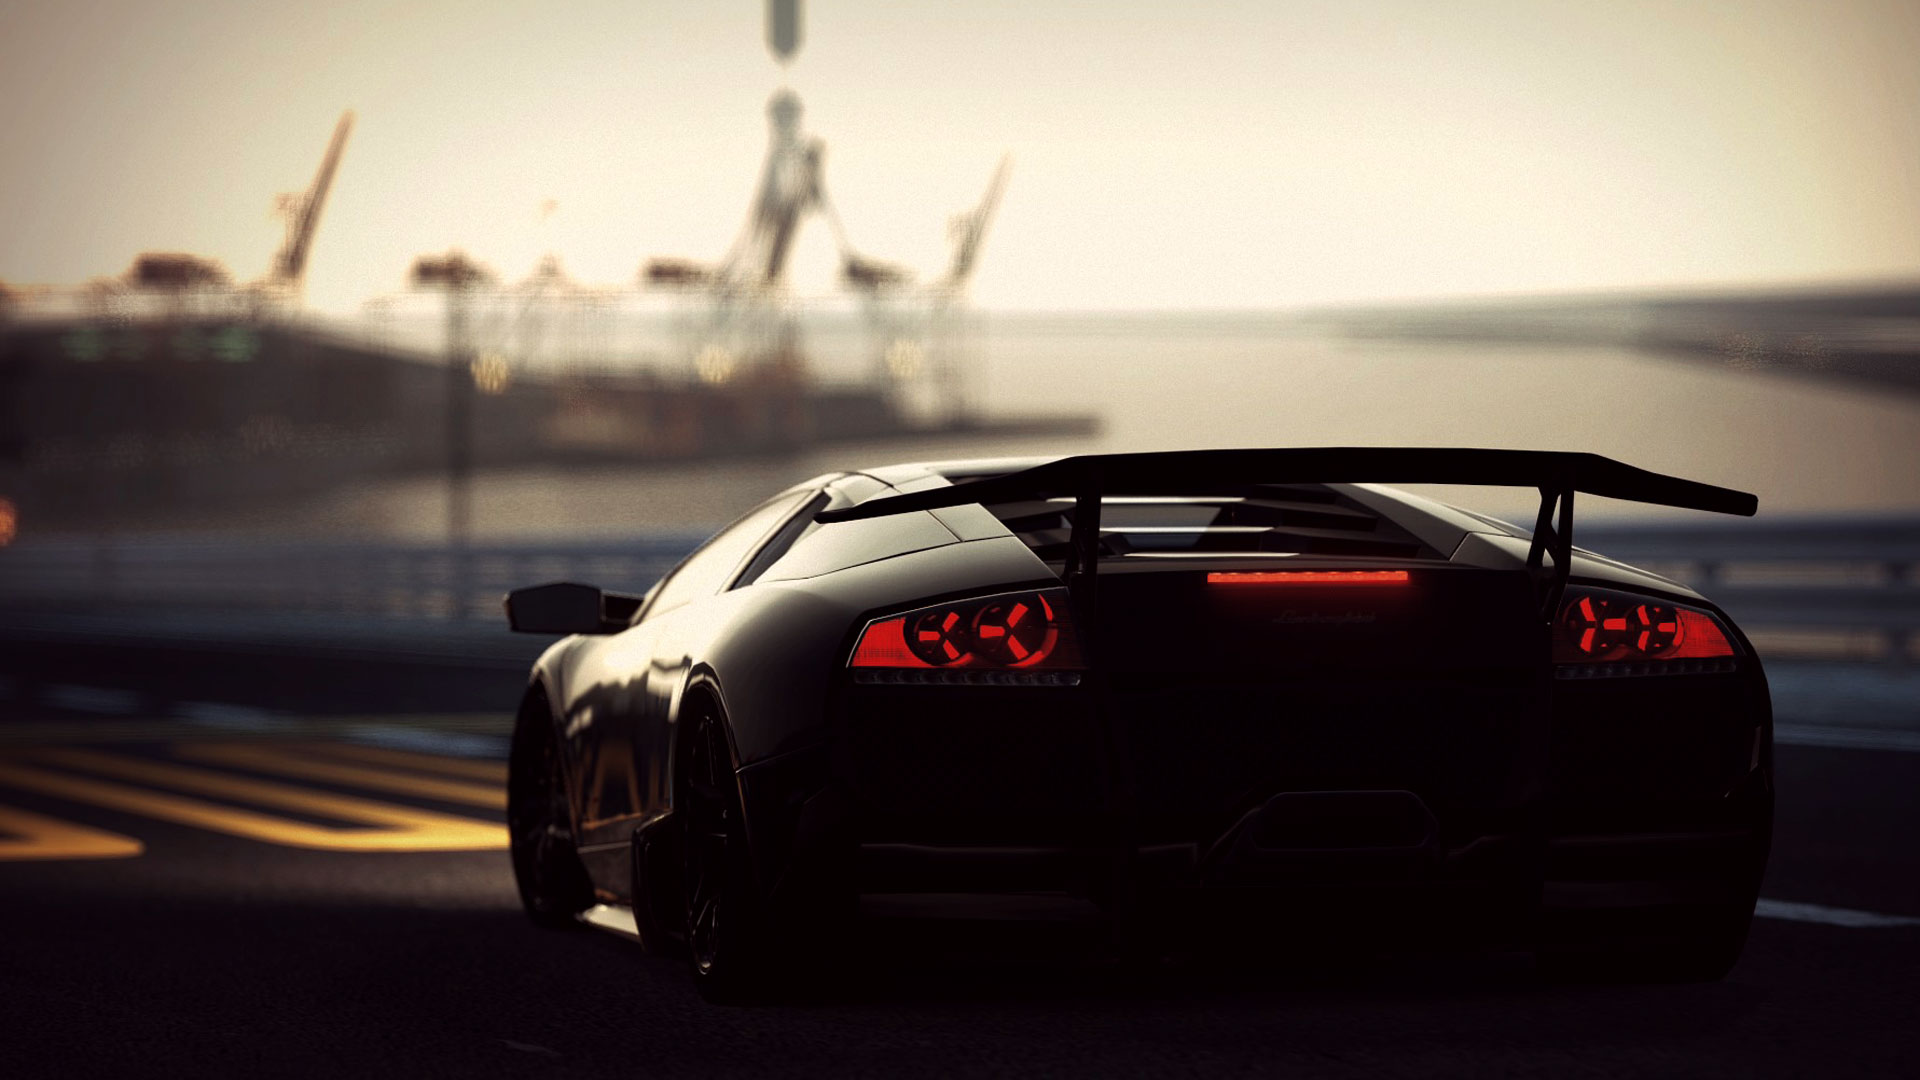 Lamborghini Hd Backgrounds